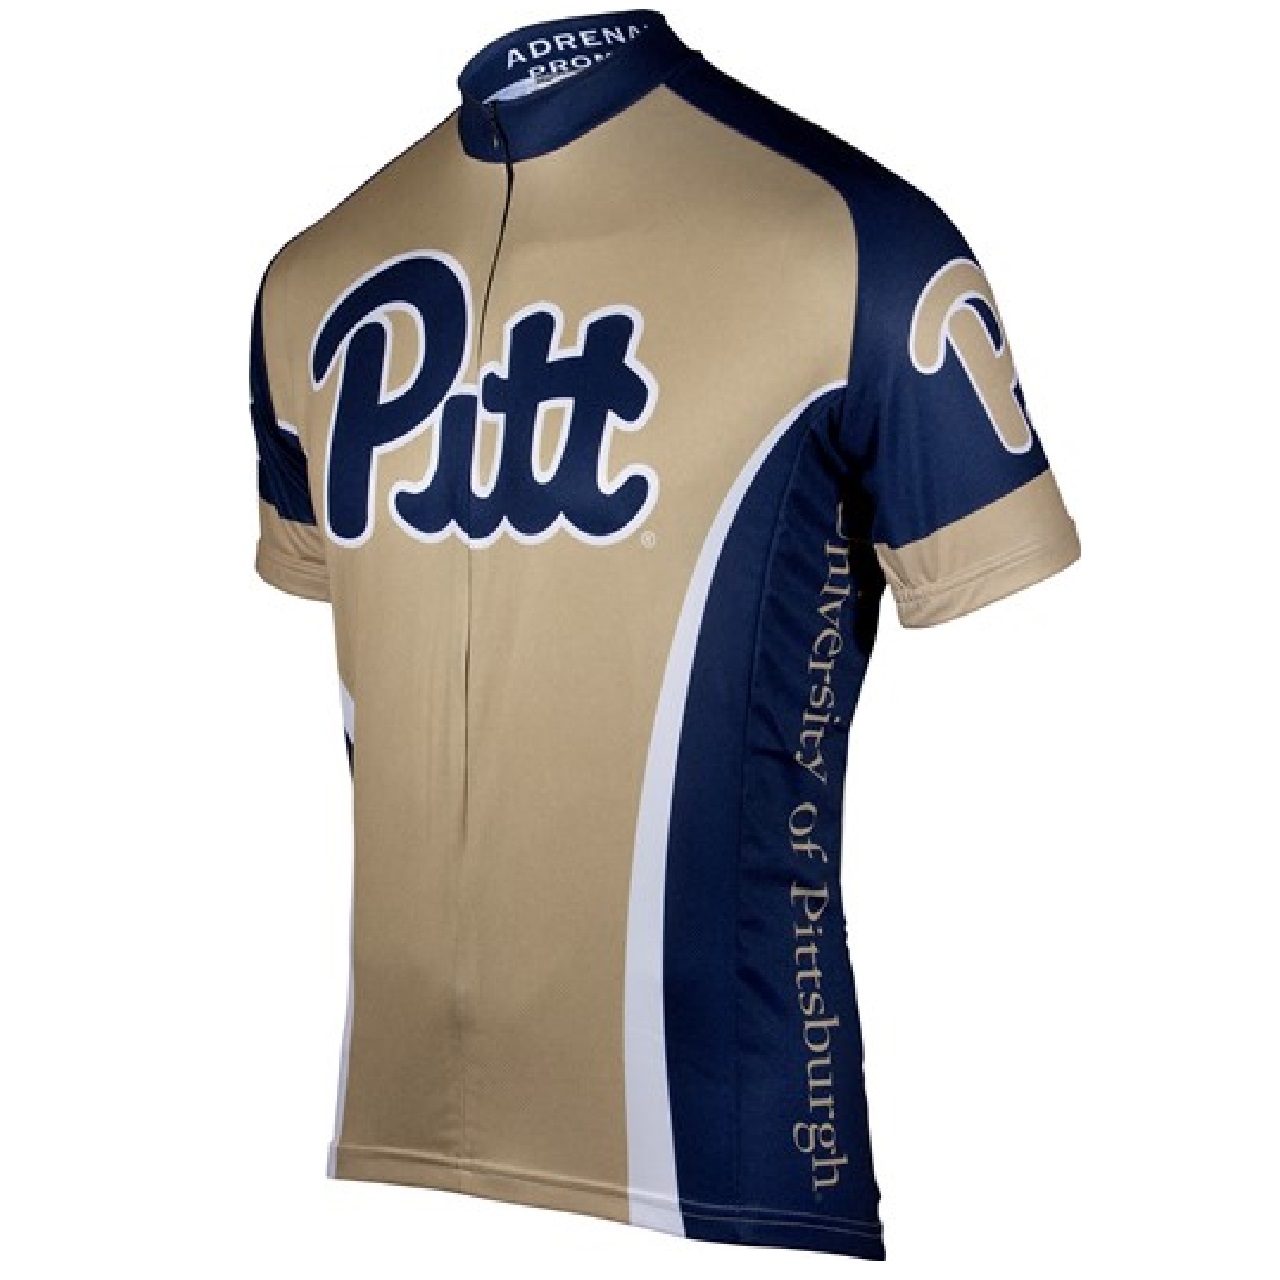 Adrenaline Promo University of Pittsburgh Pitt College 3/4 zip Men's Cycling Jersey